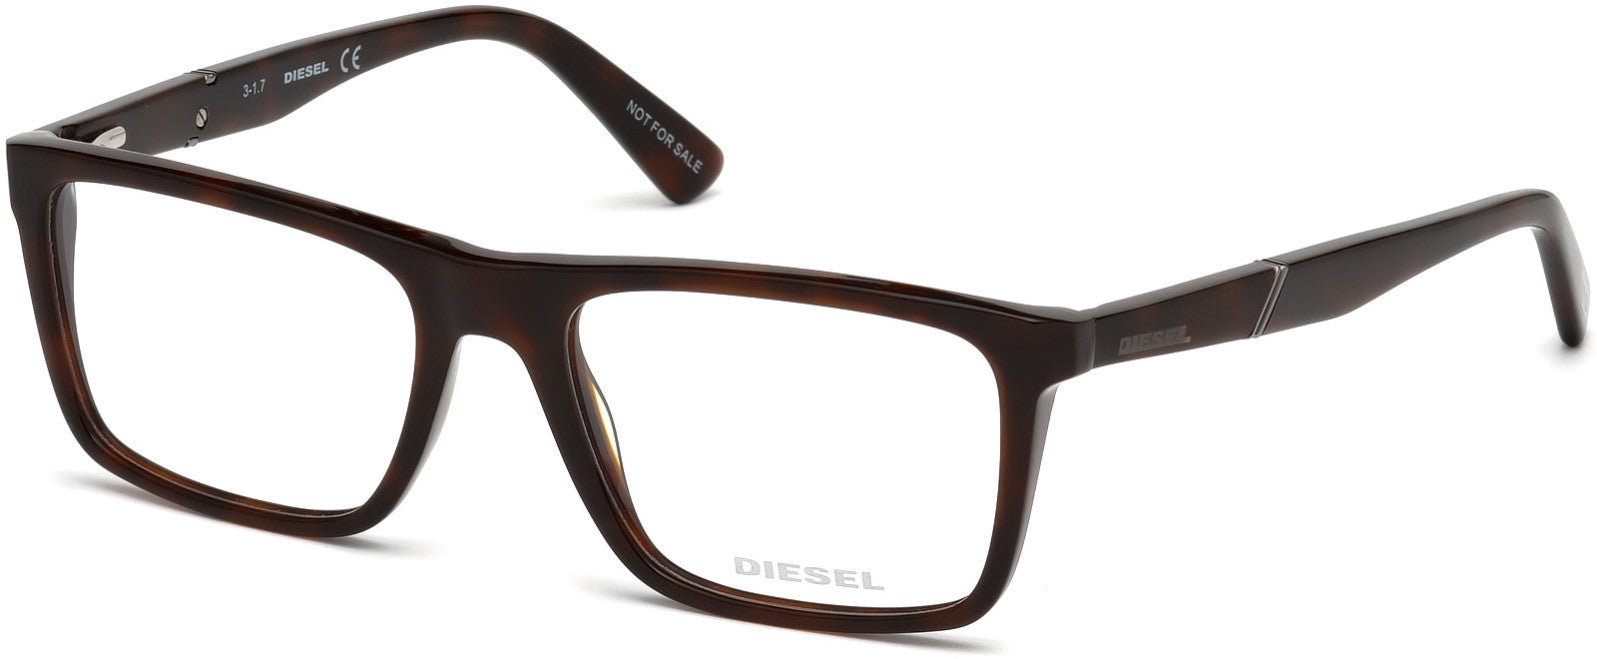 Diesel DL5257 Rectangular Eyeglasses 052-052 - Dark Havana